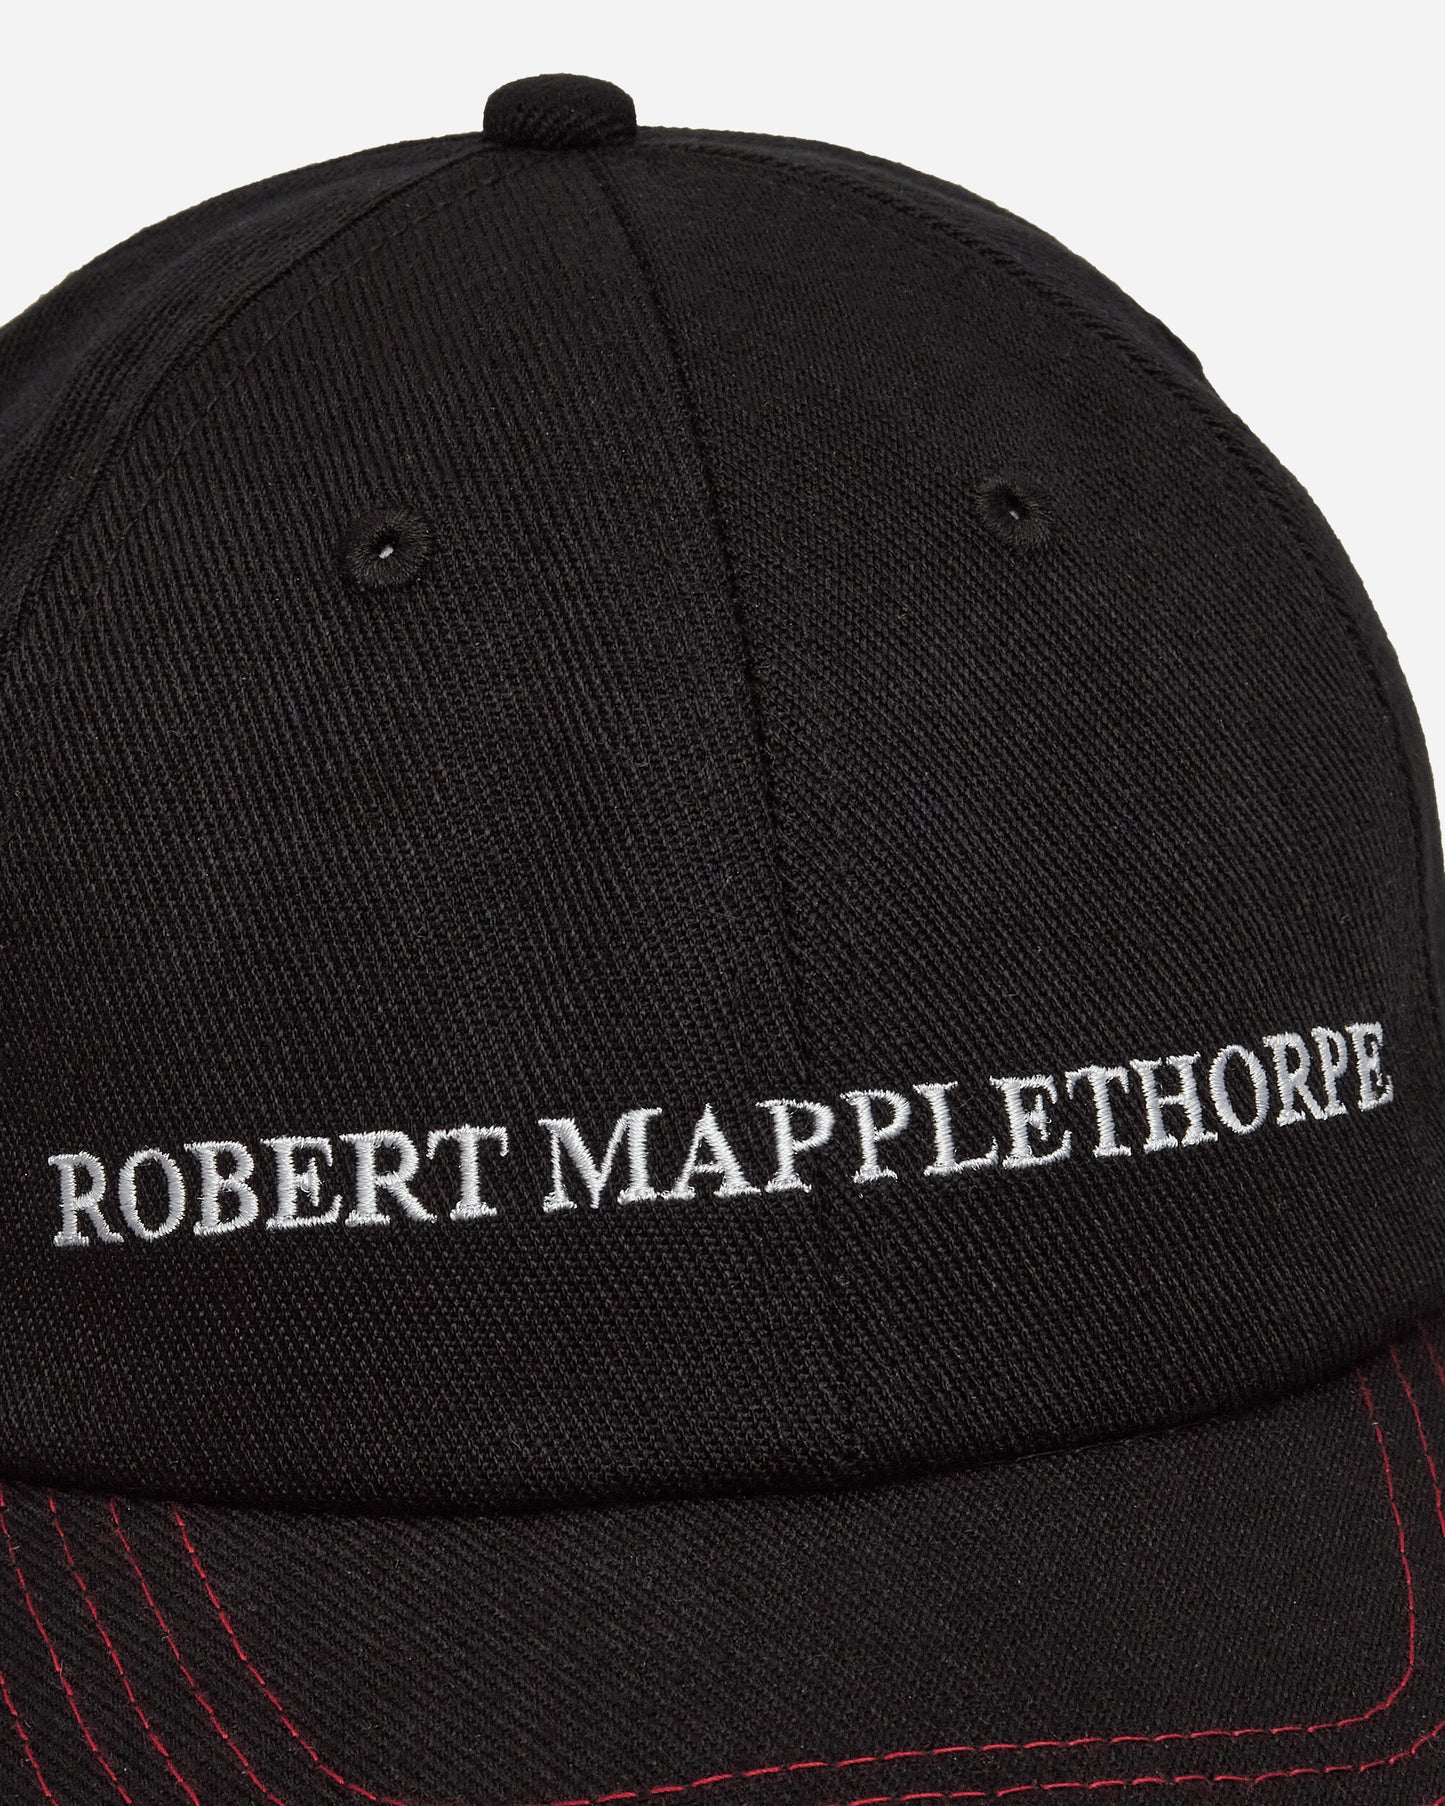 Pleasures Robert Mapplethorpe Cap Black Hats Caps P23W018 BLACK